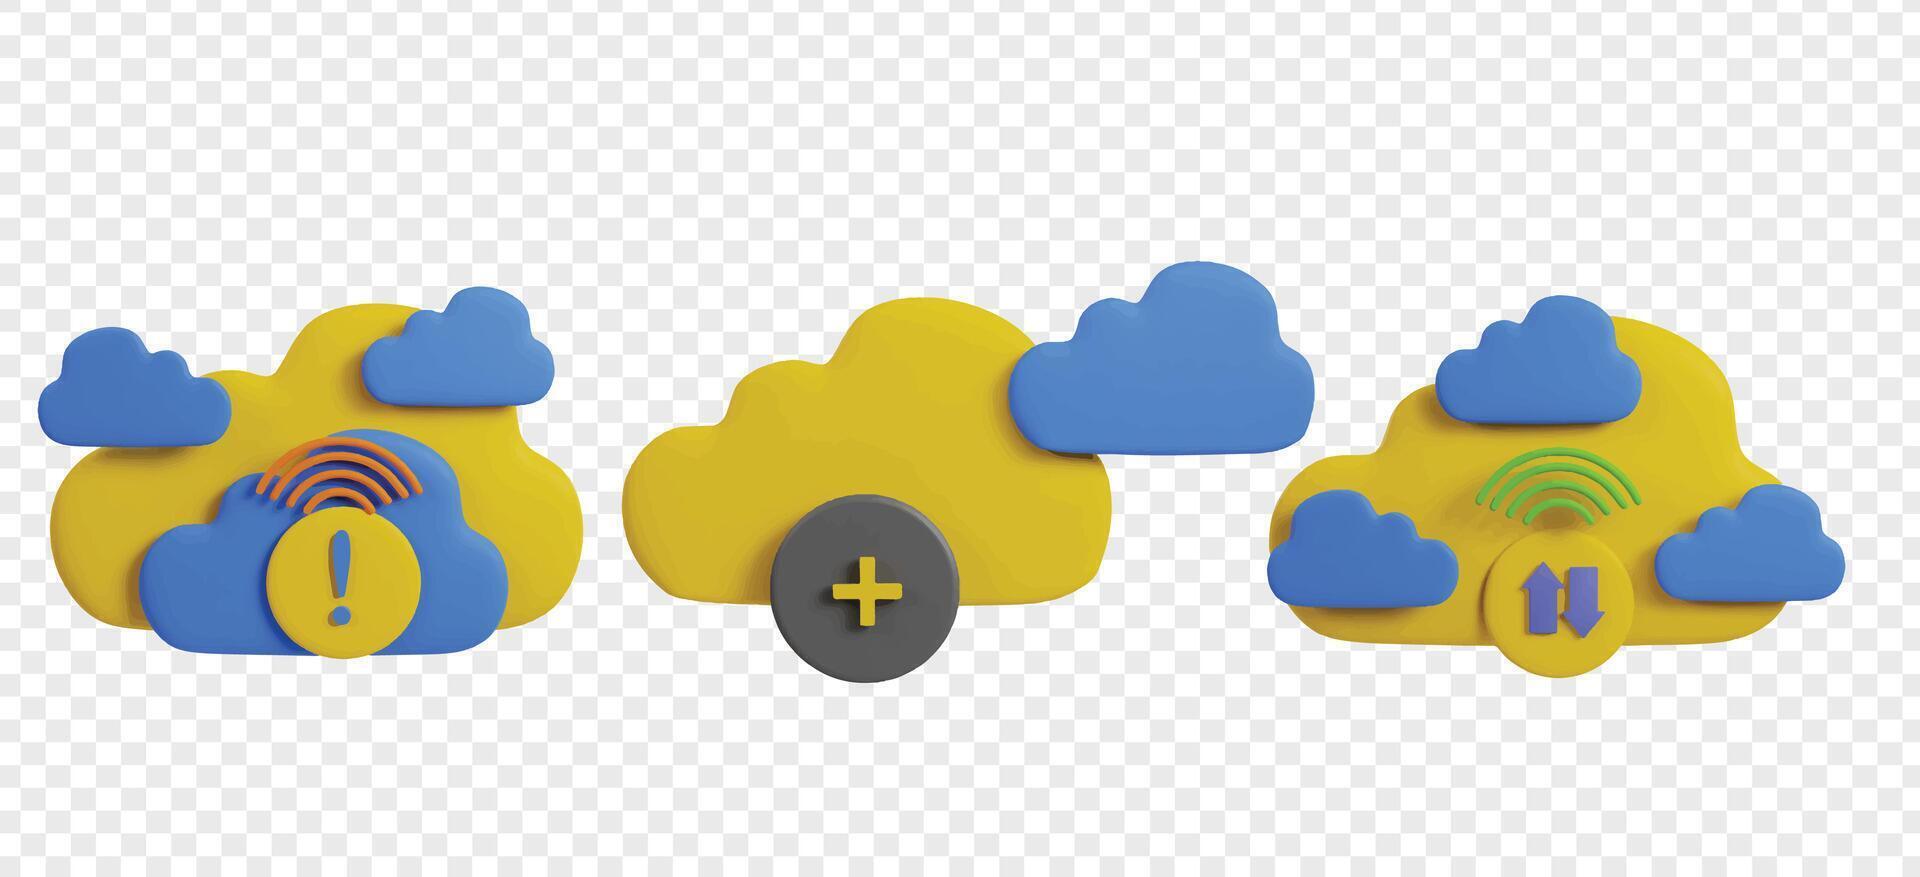 Cloud Computing 3d icons clipart. vector